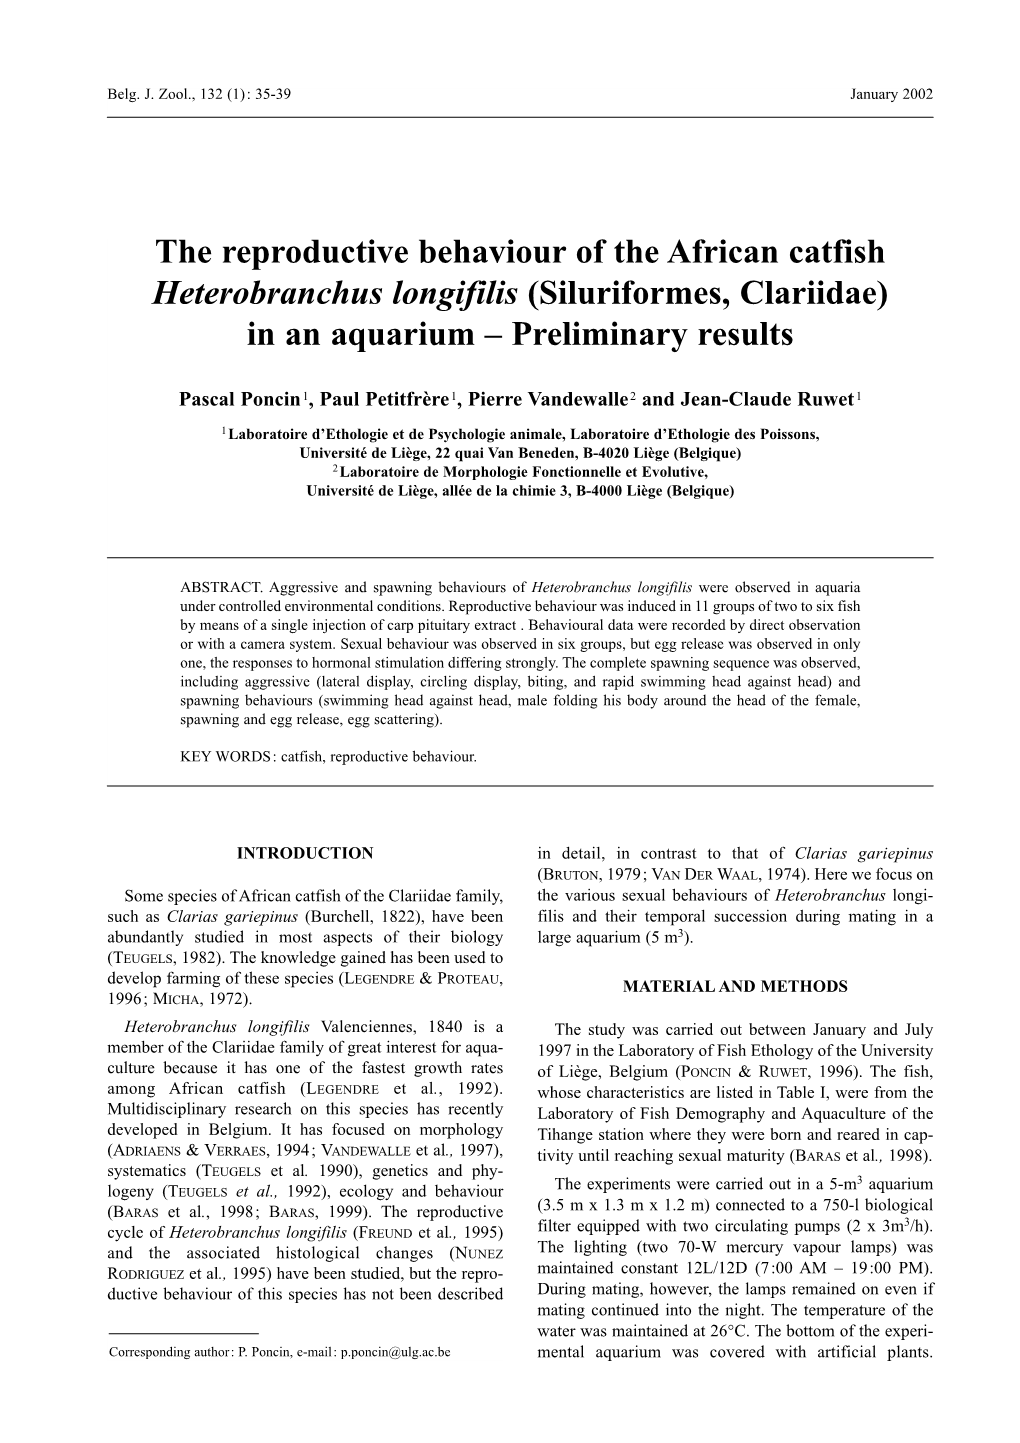 The Reproductive Behaviour of the African Catfish Heterobranchus Longifilis (Siluriformes, Clariidae) in an Aquarium – Preliminary Results